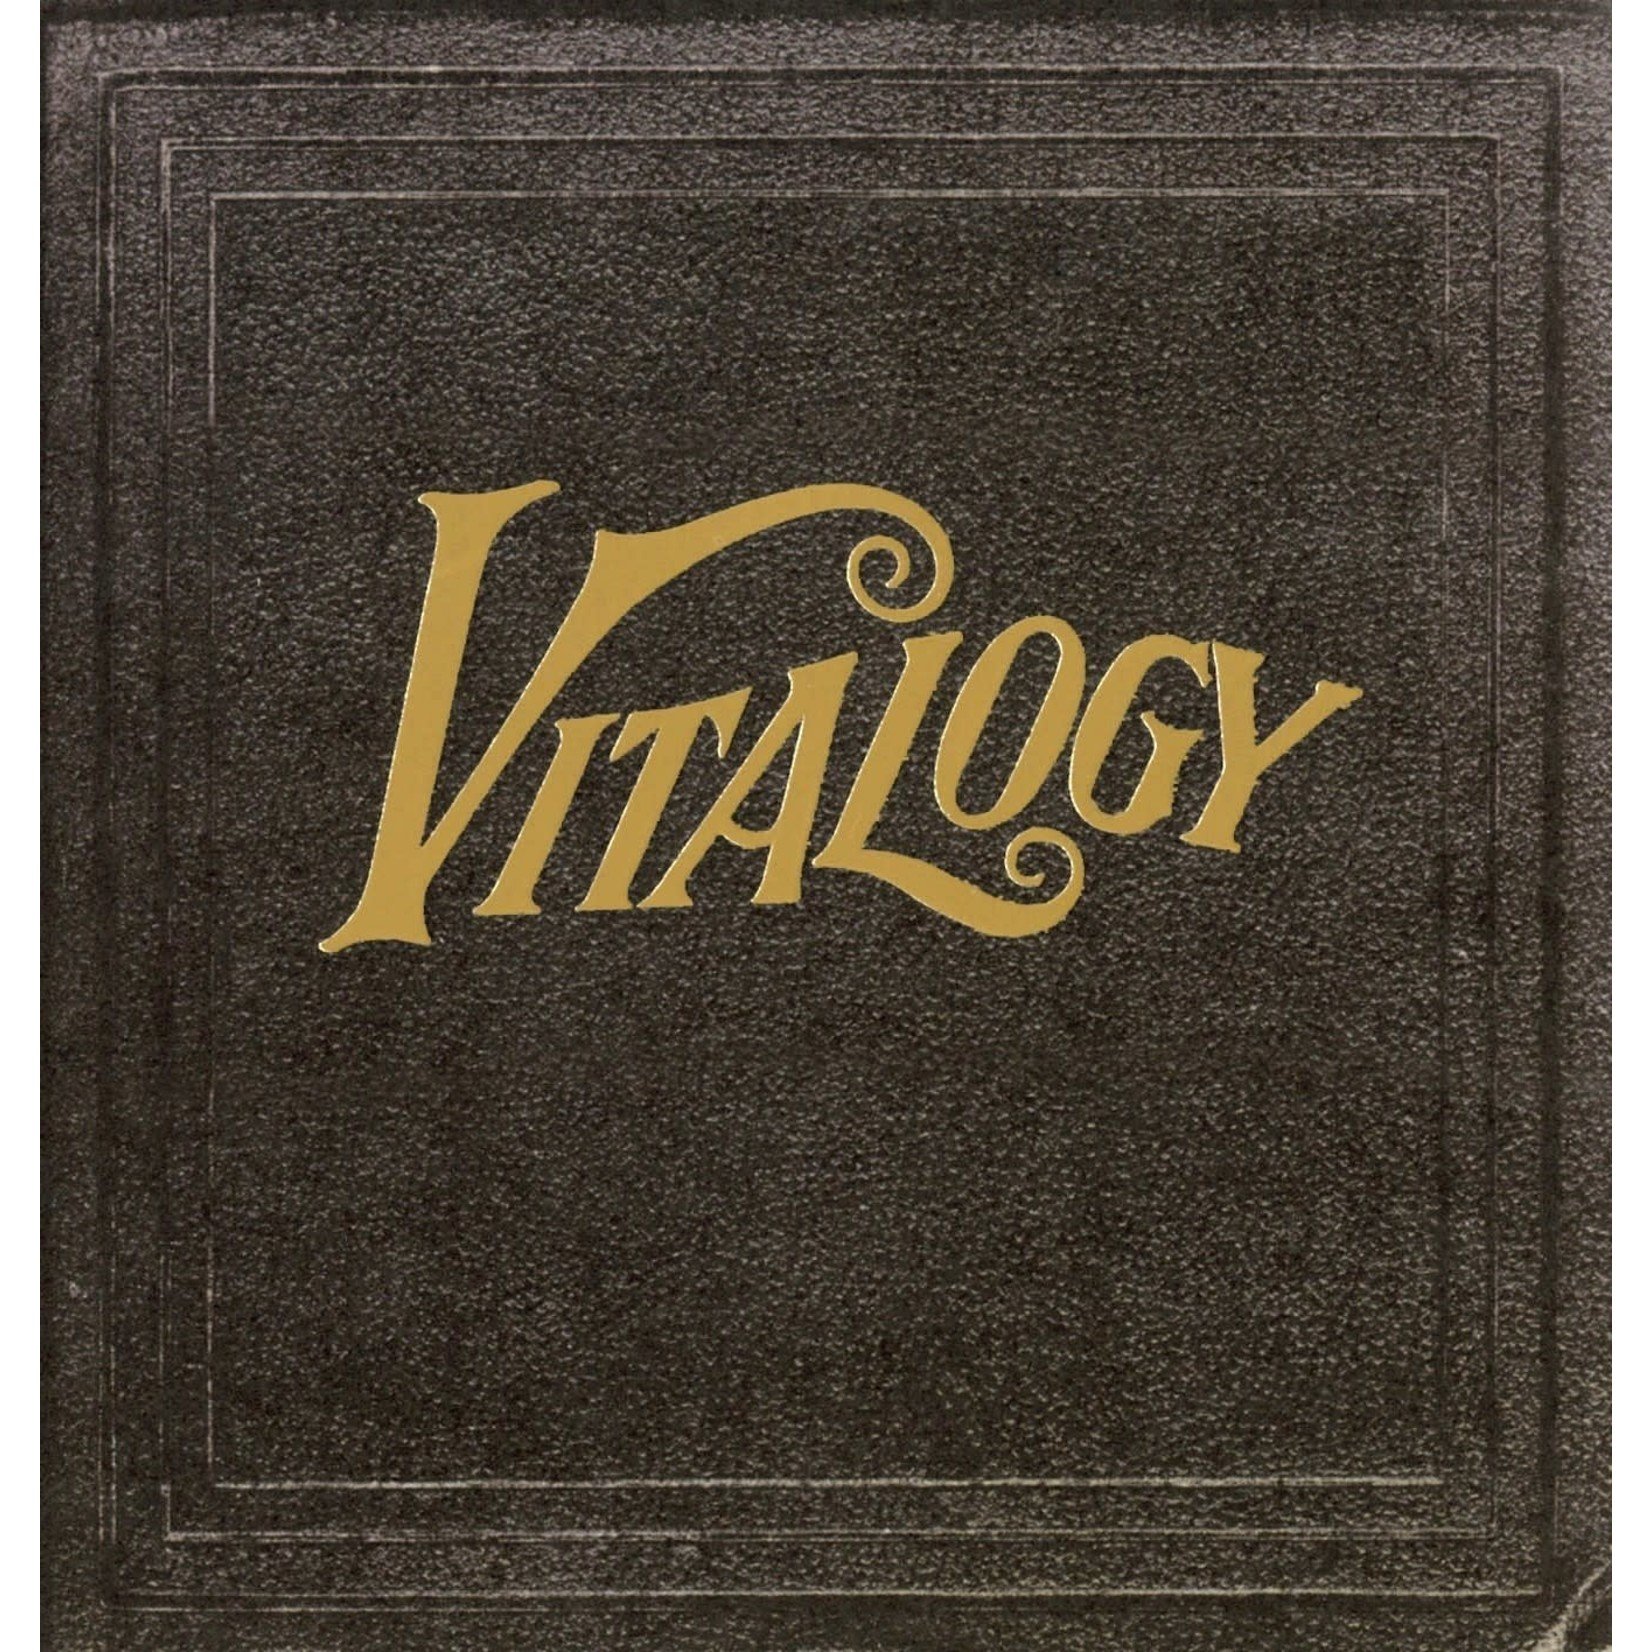 [New] Pearl Jam - Vitalogy (2LP)